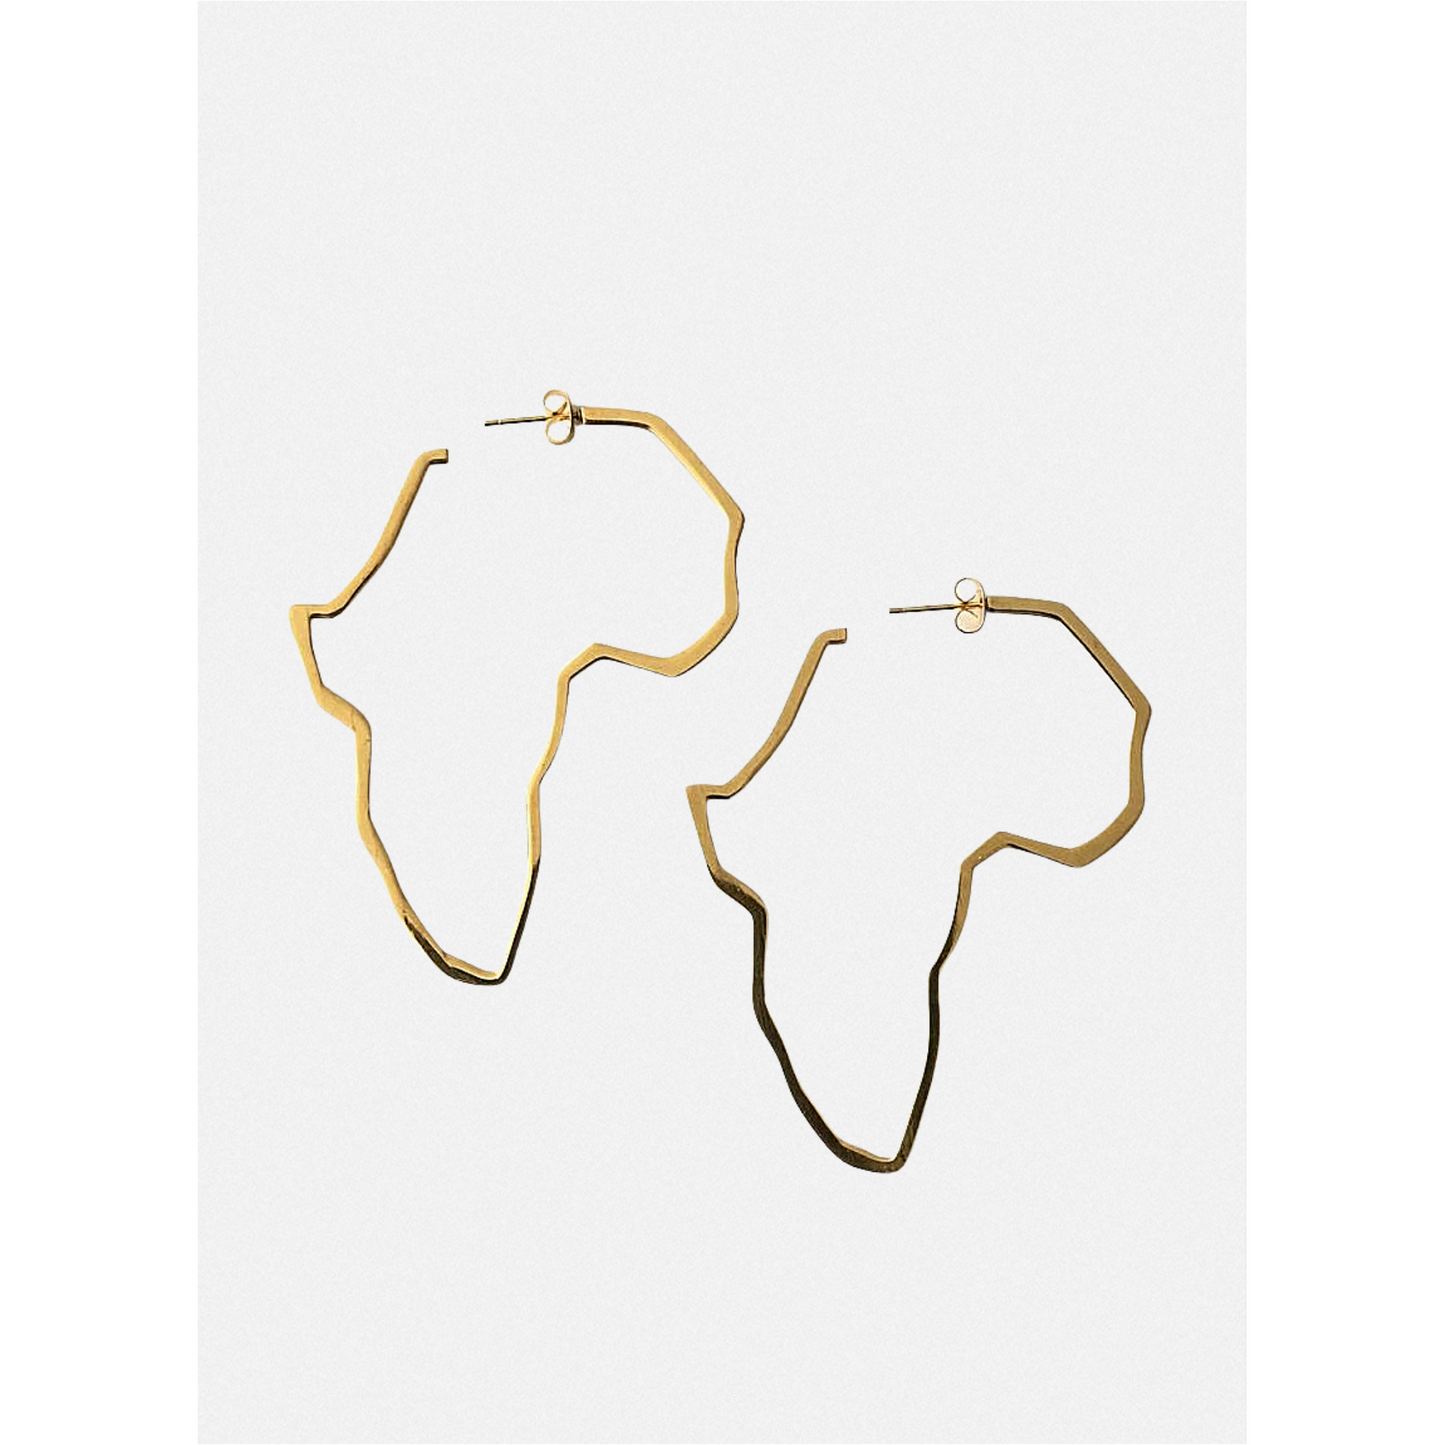 Afrique Gold Earrings